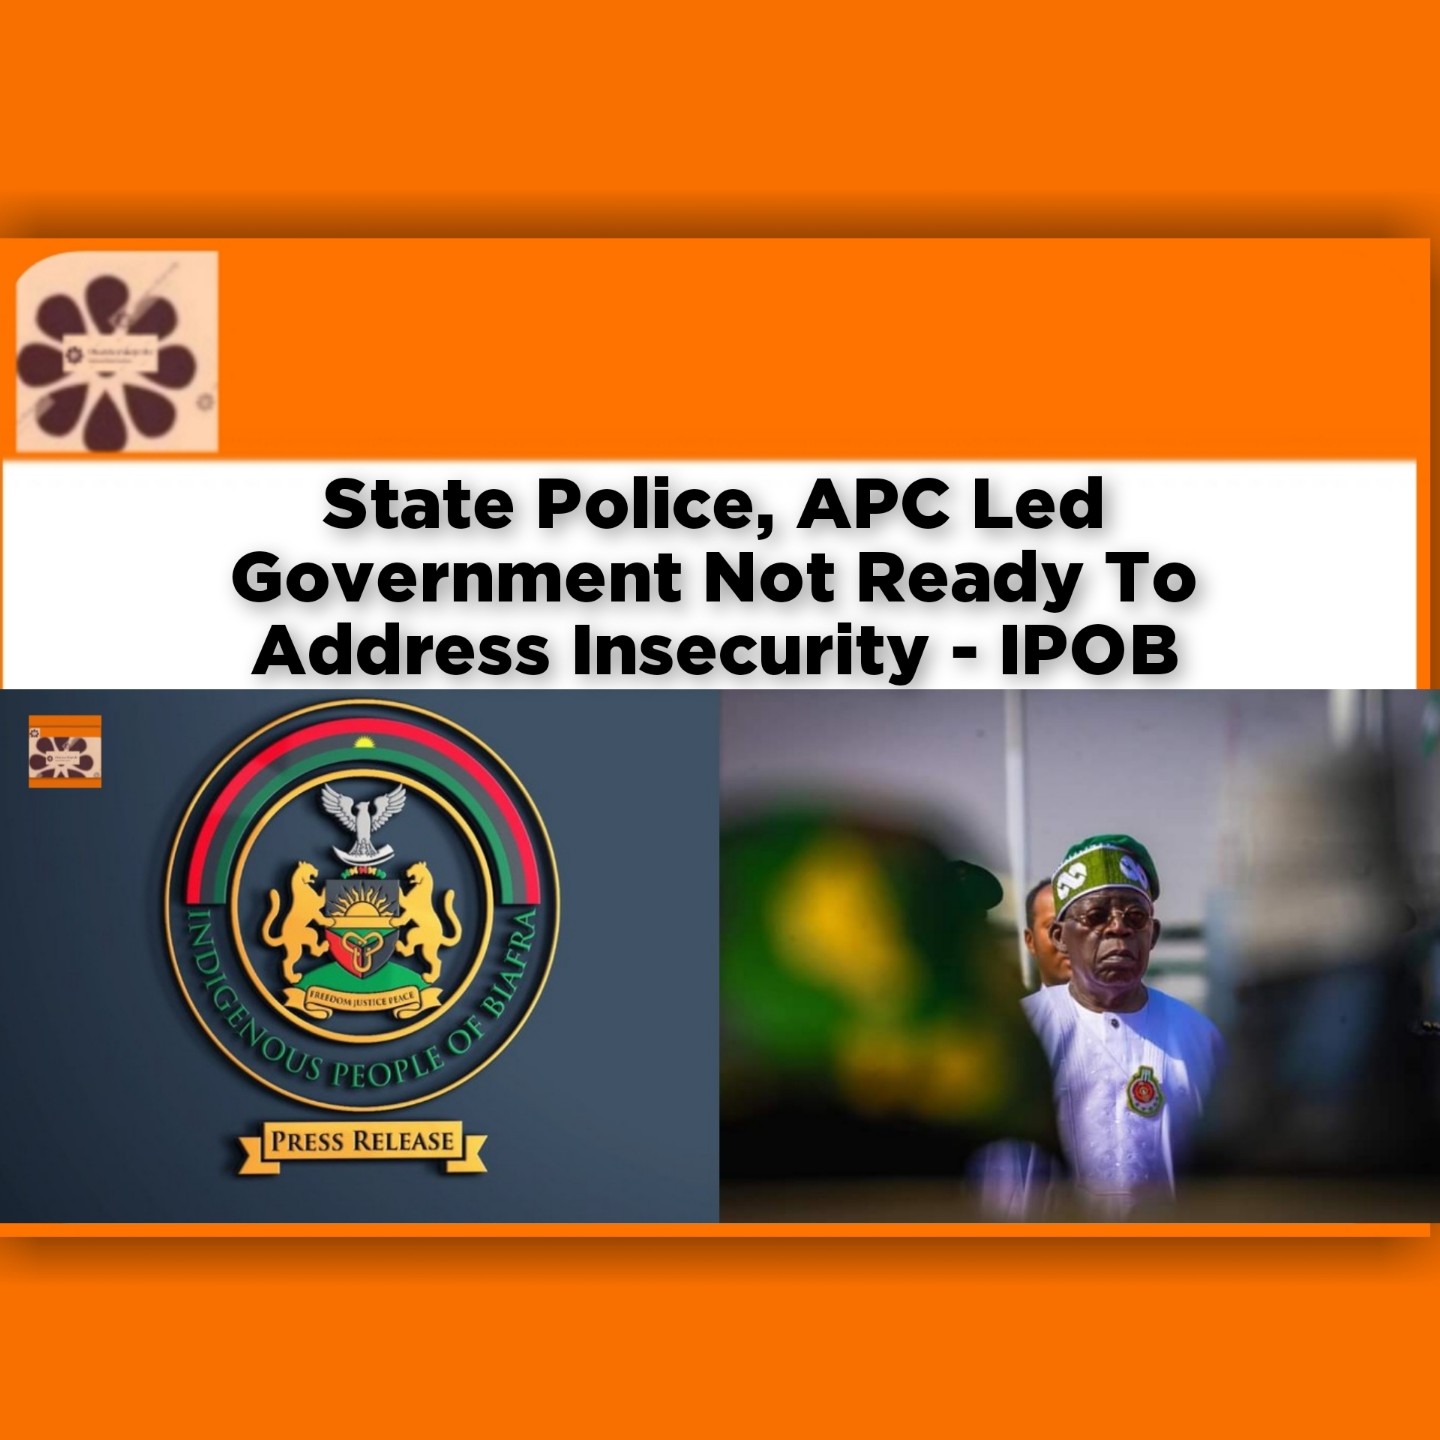 State Police, APC Led Government Not Ready To Address Insecurity - IPOB ~ OsazuwaAkonedo #Biafra #Bola #ESN #ipob #Nigeria #StatePolice #Tinubu